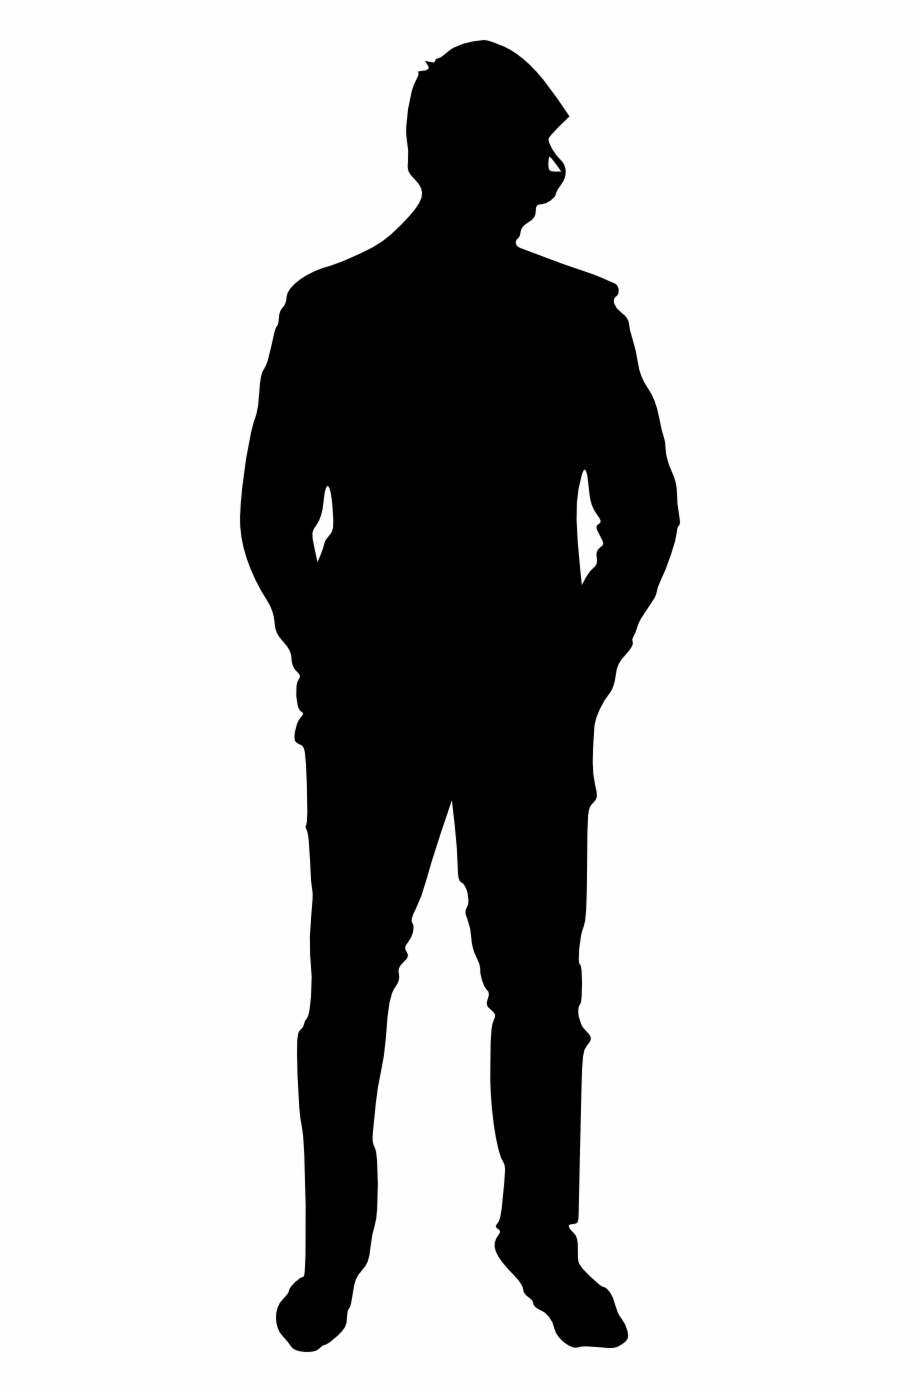 person silhouette no background
